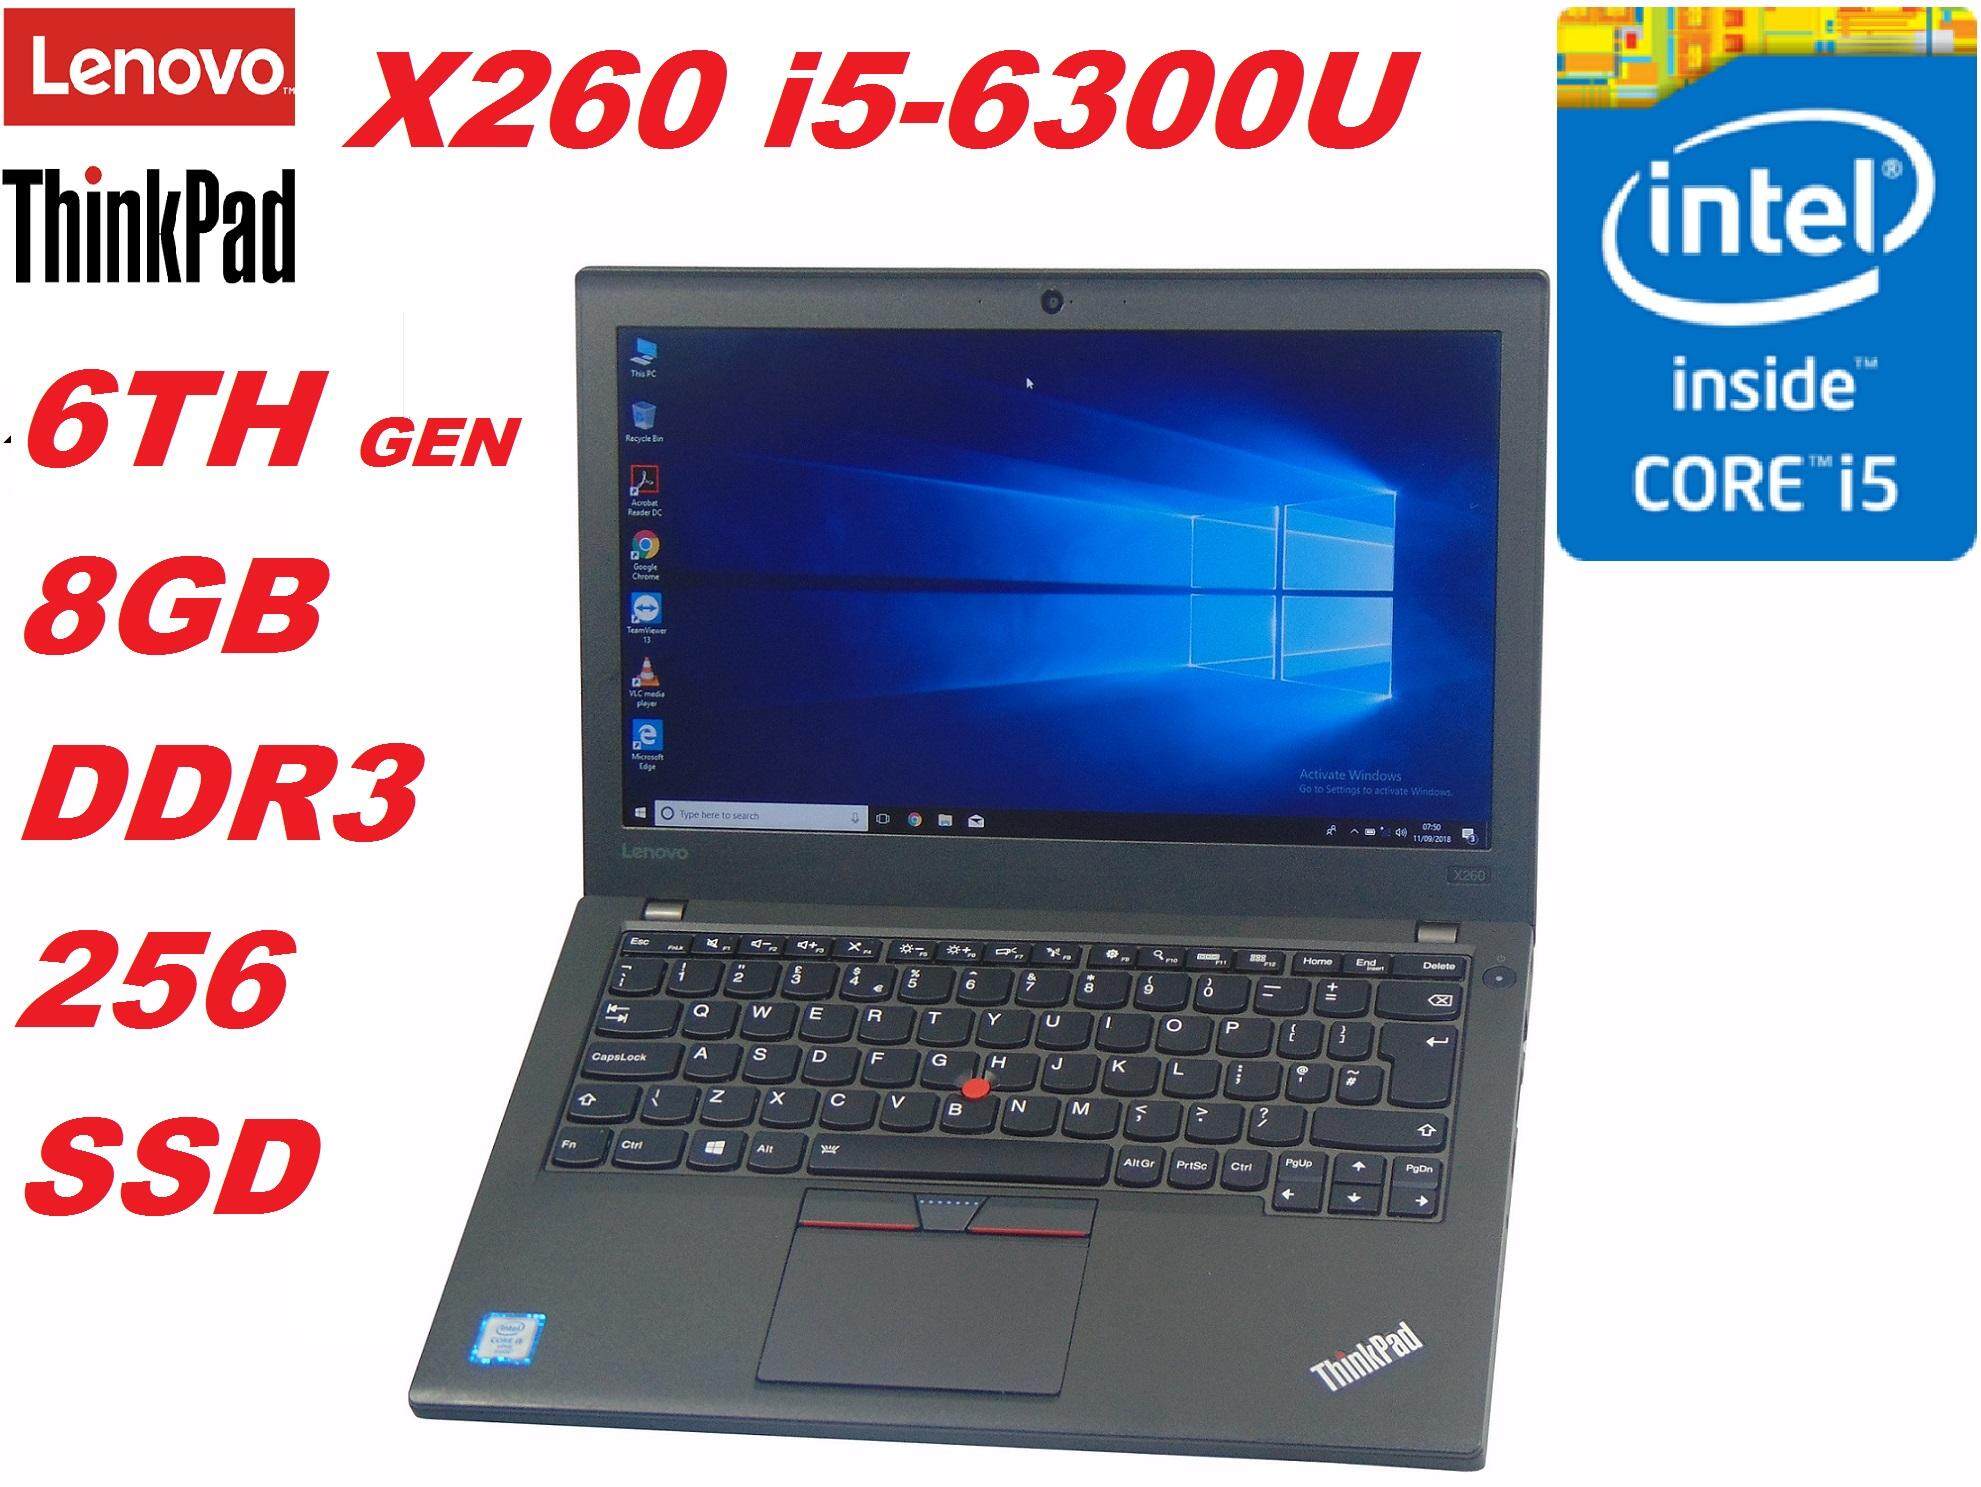 LENOVO ThinkPad X260 , INTEL CORE i5-6300U 2.4GHZ 6TH GEN CPU/8GB RAM